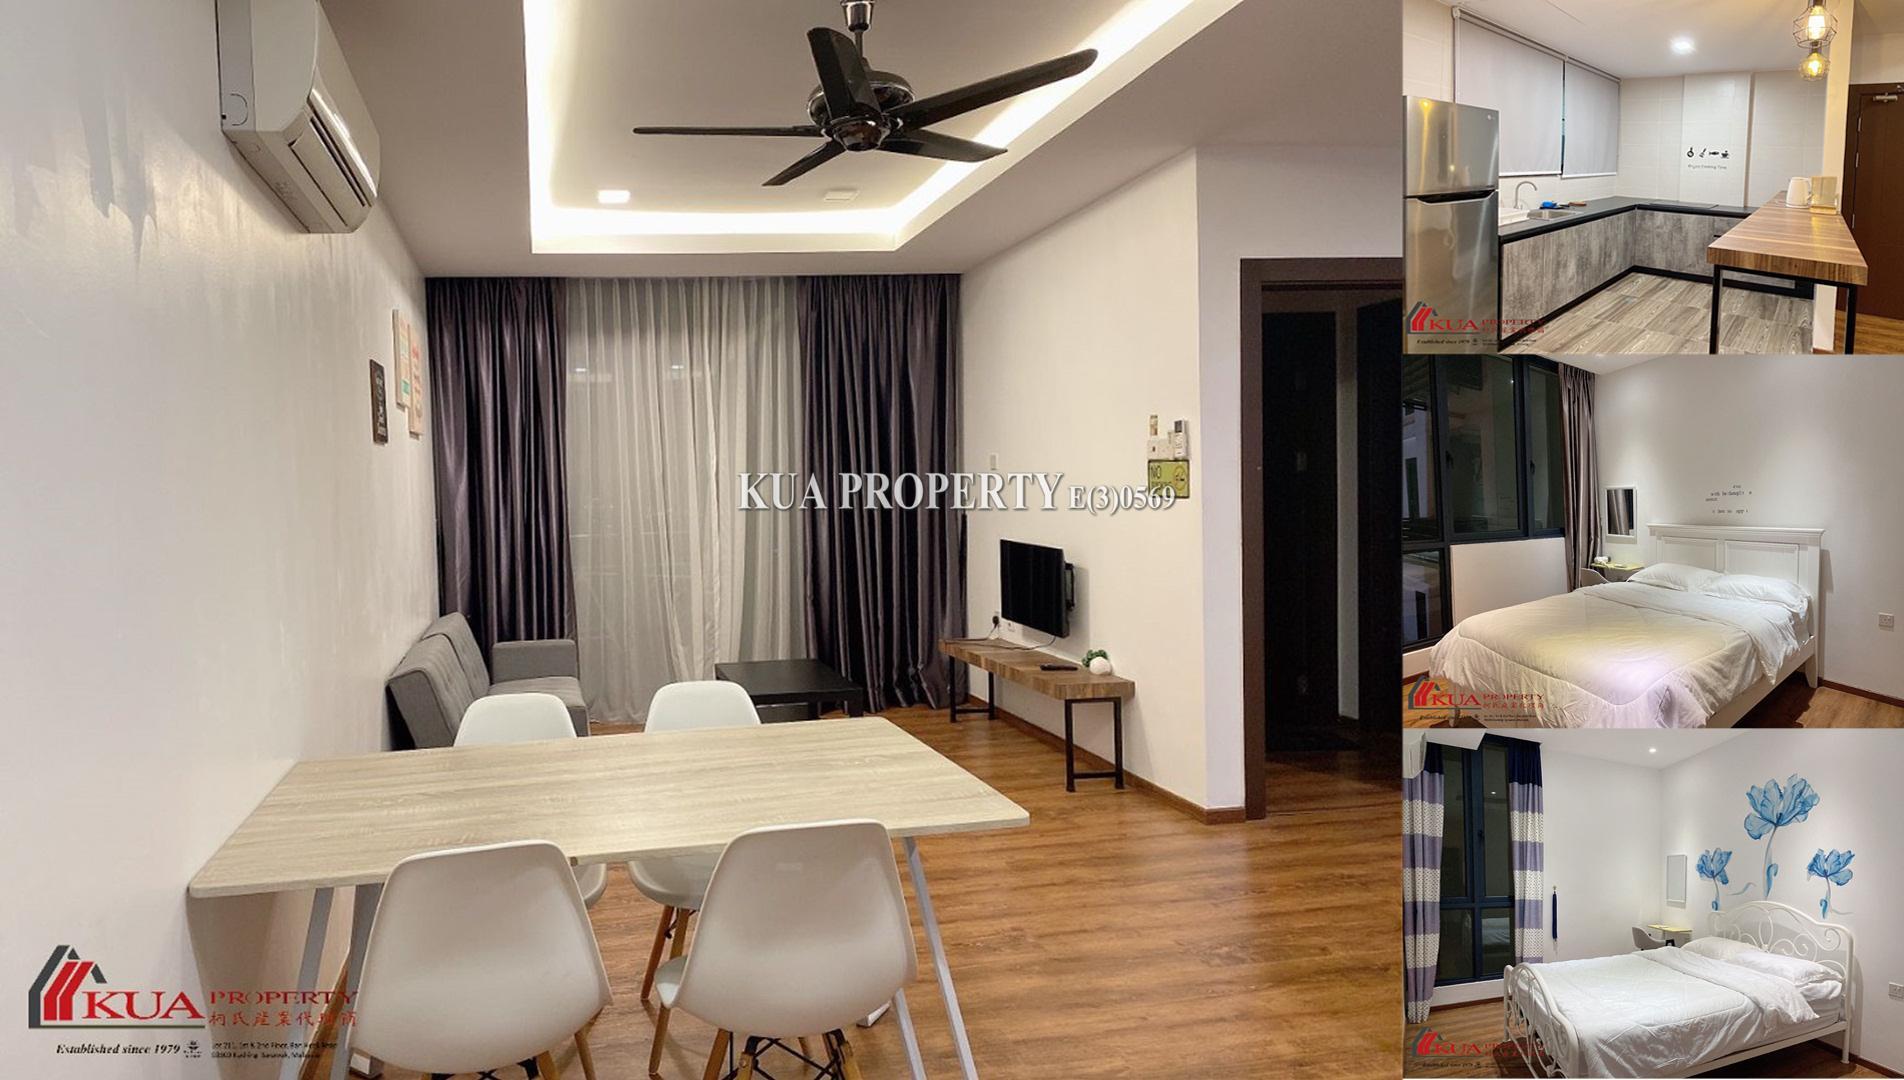 Viva Jazz 1 Condominium For Rent! at Jalan Wan Alwi, Vivacity